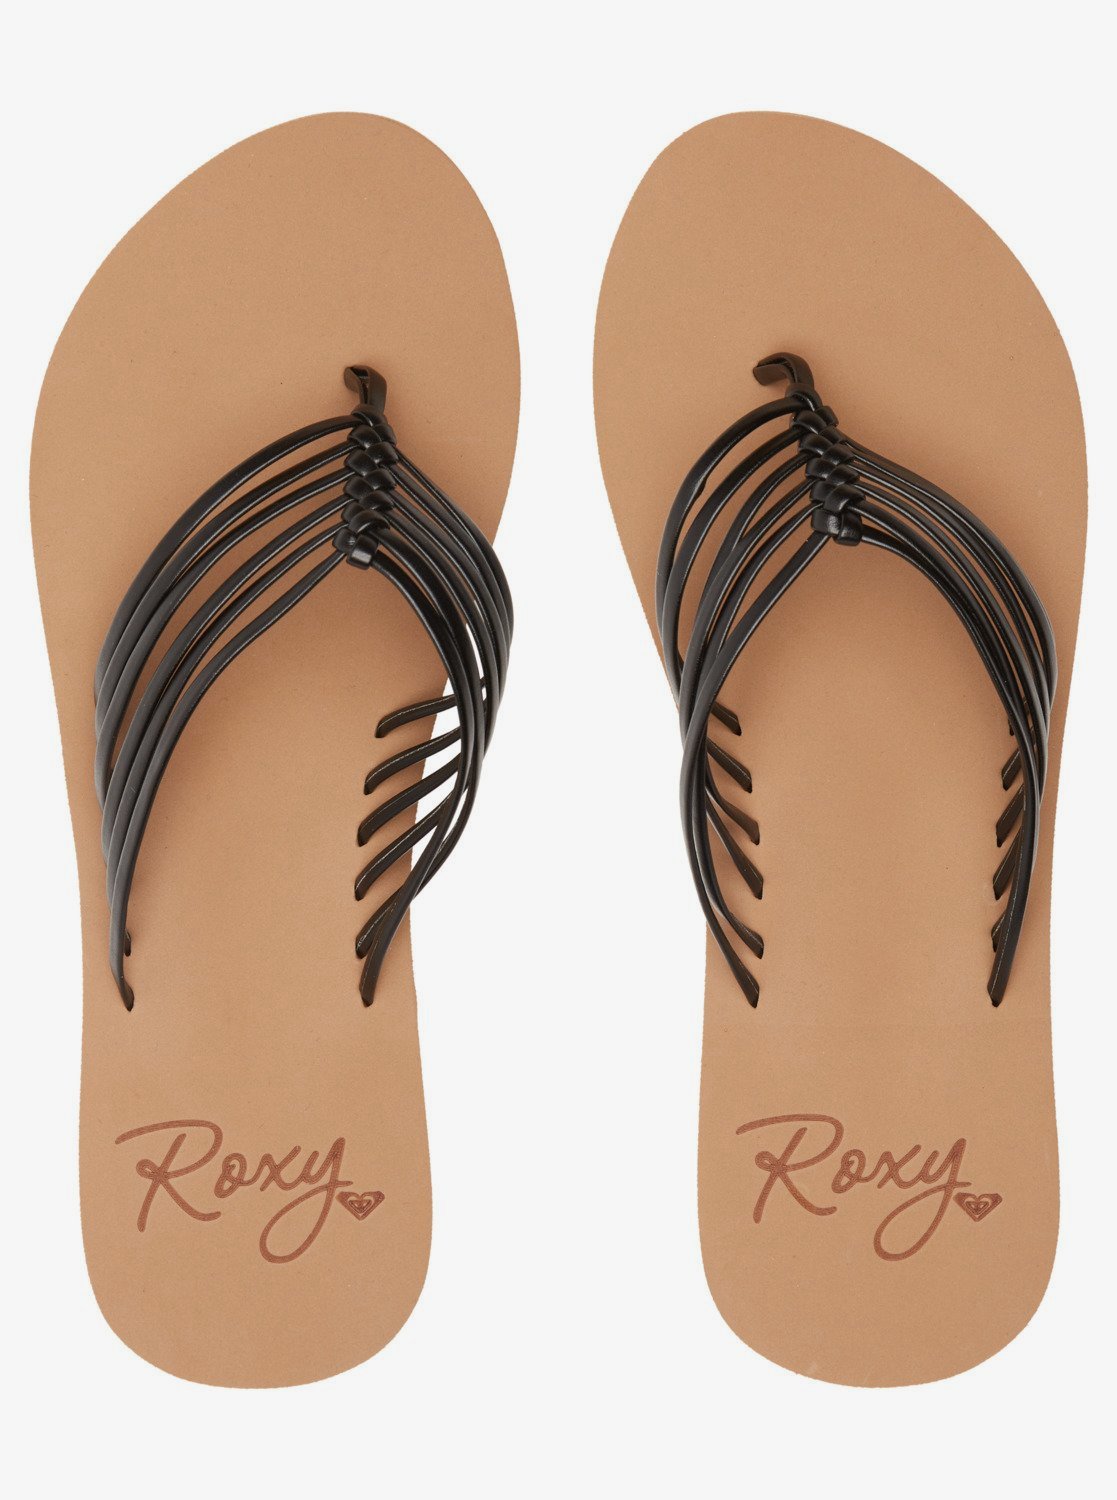 Roxy Womens Flip Flop Sandals Size 10 Black White Palm Design Dual Layer  Sole